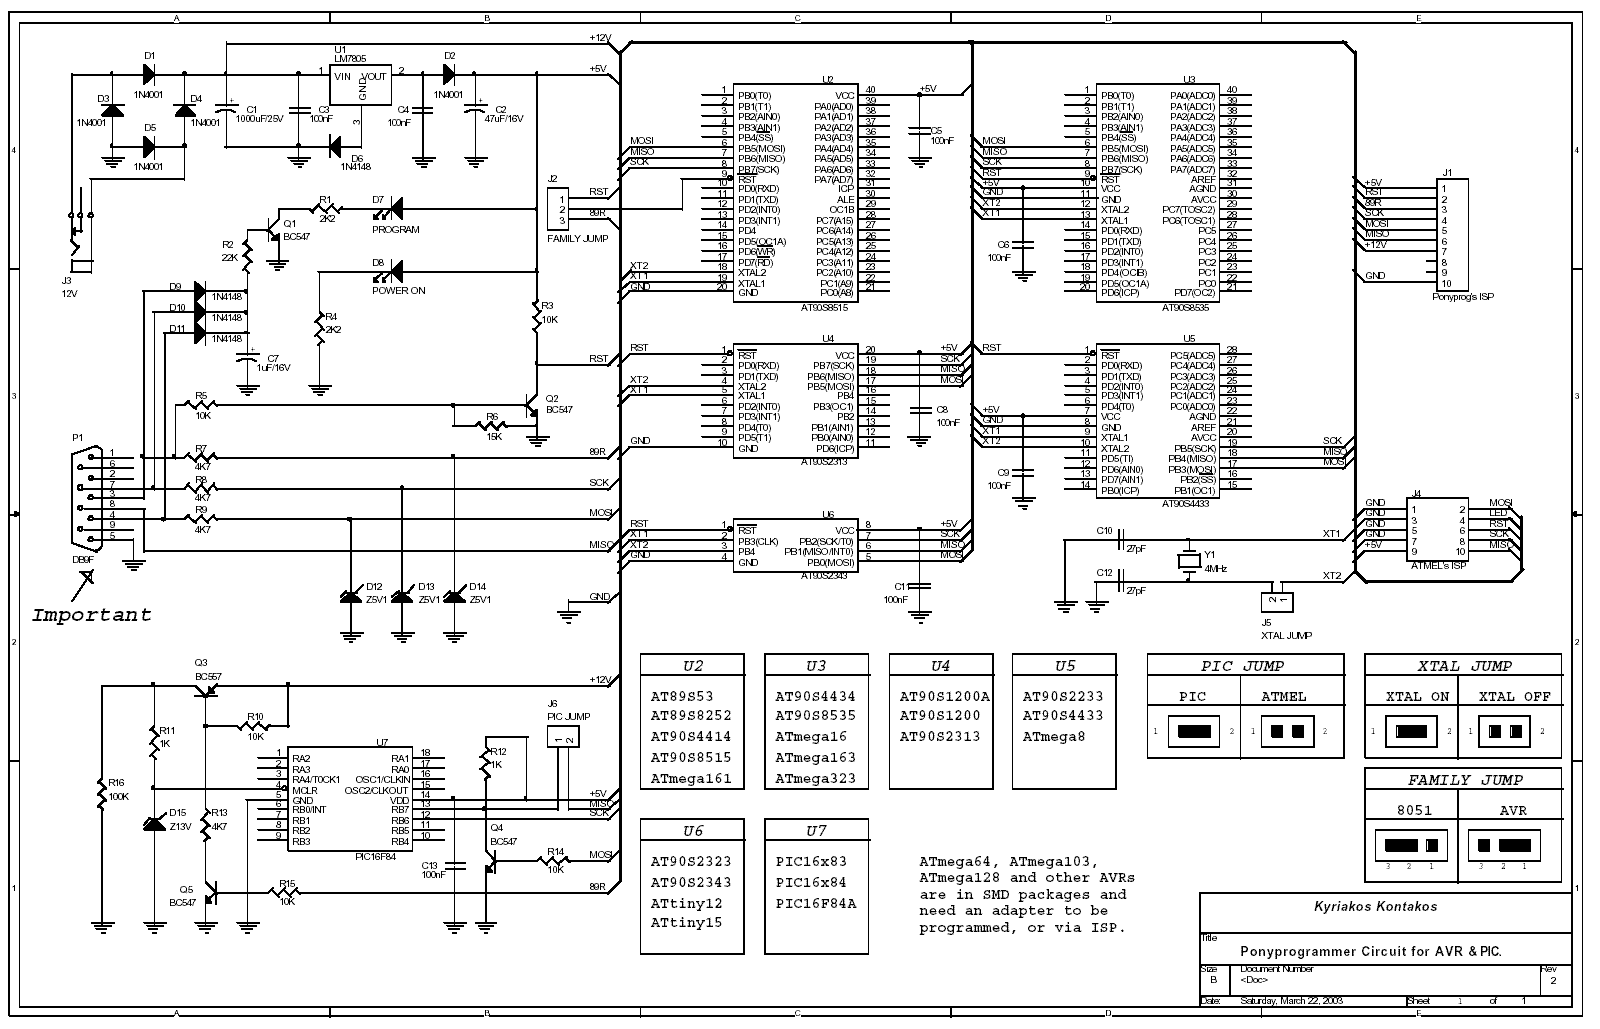 Ponyprog Circuit for AVR & PIC16F84 - Electronics-Lab